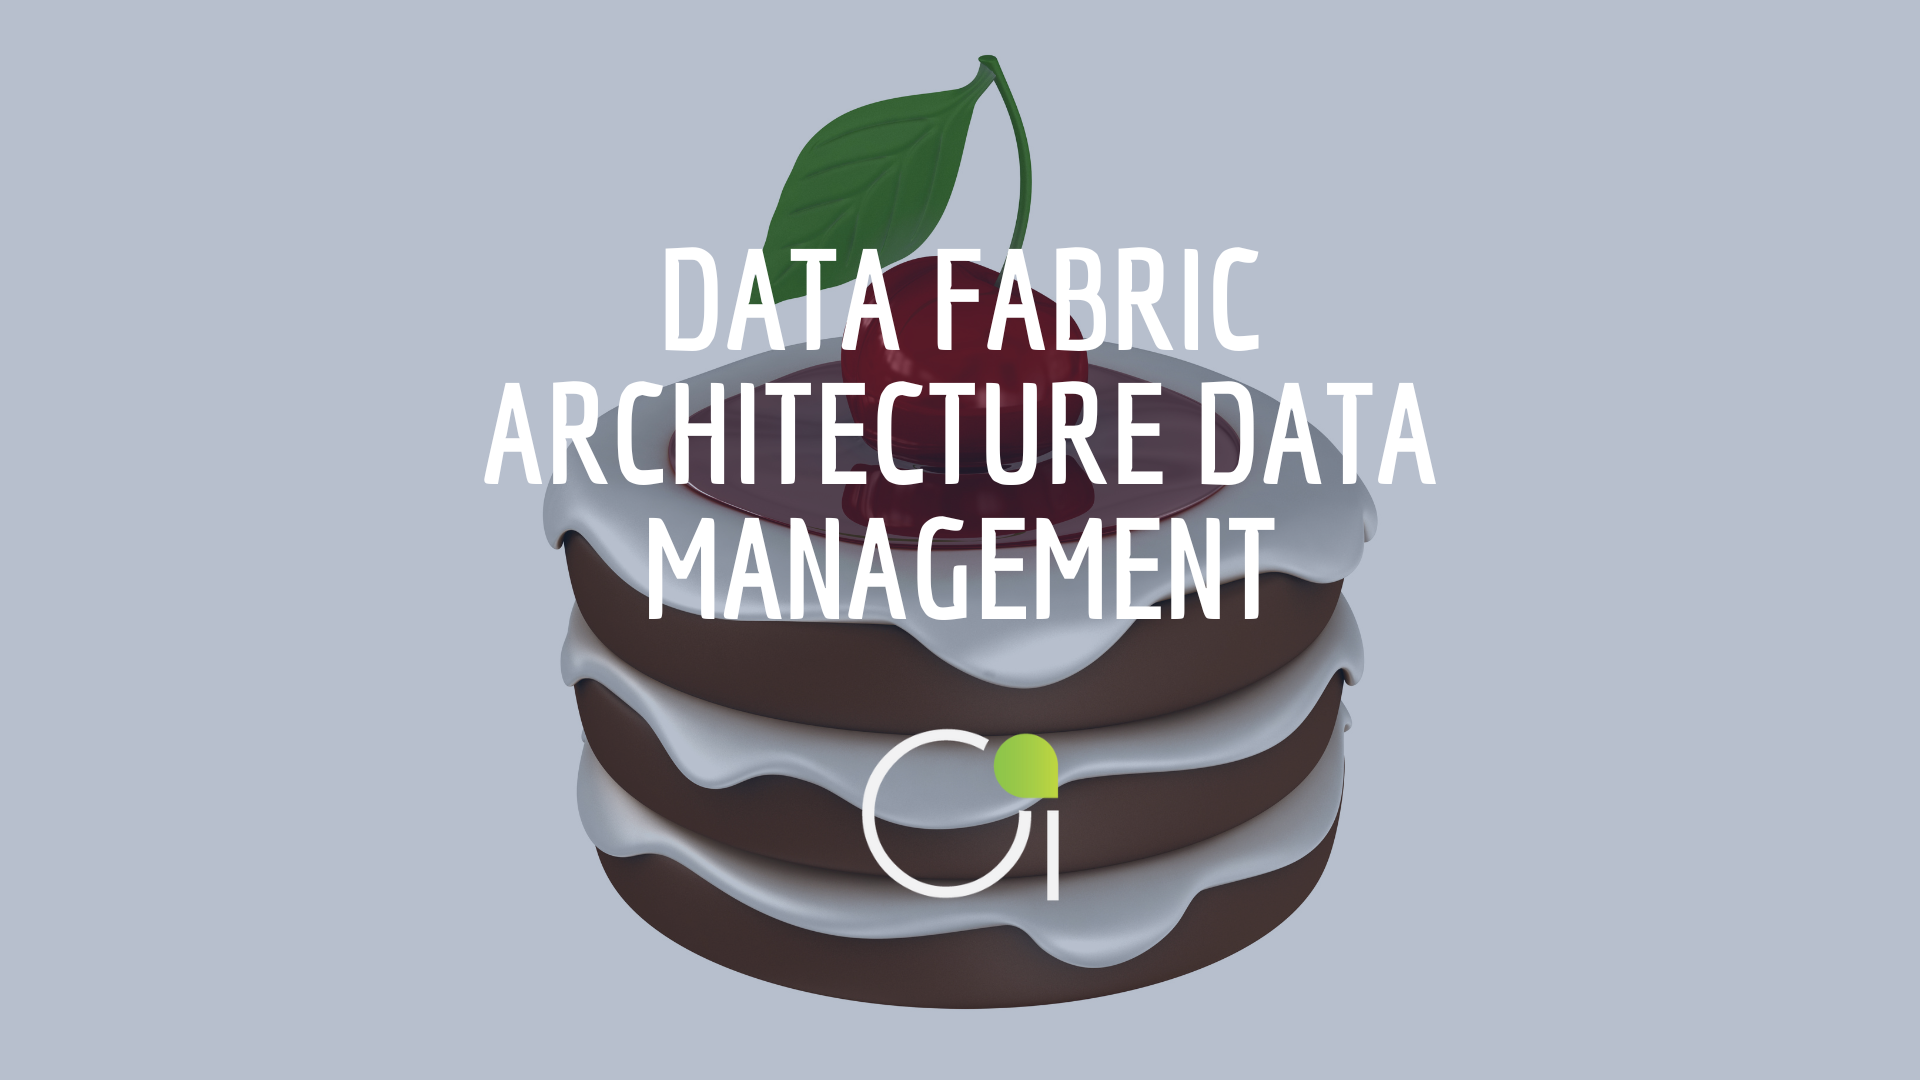 data fabric data management